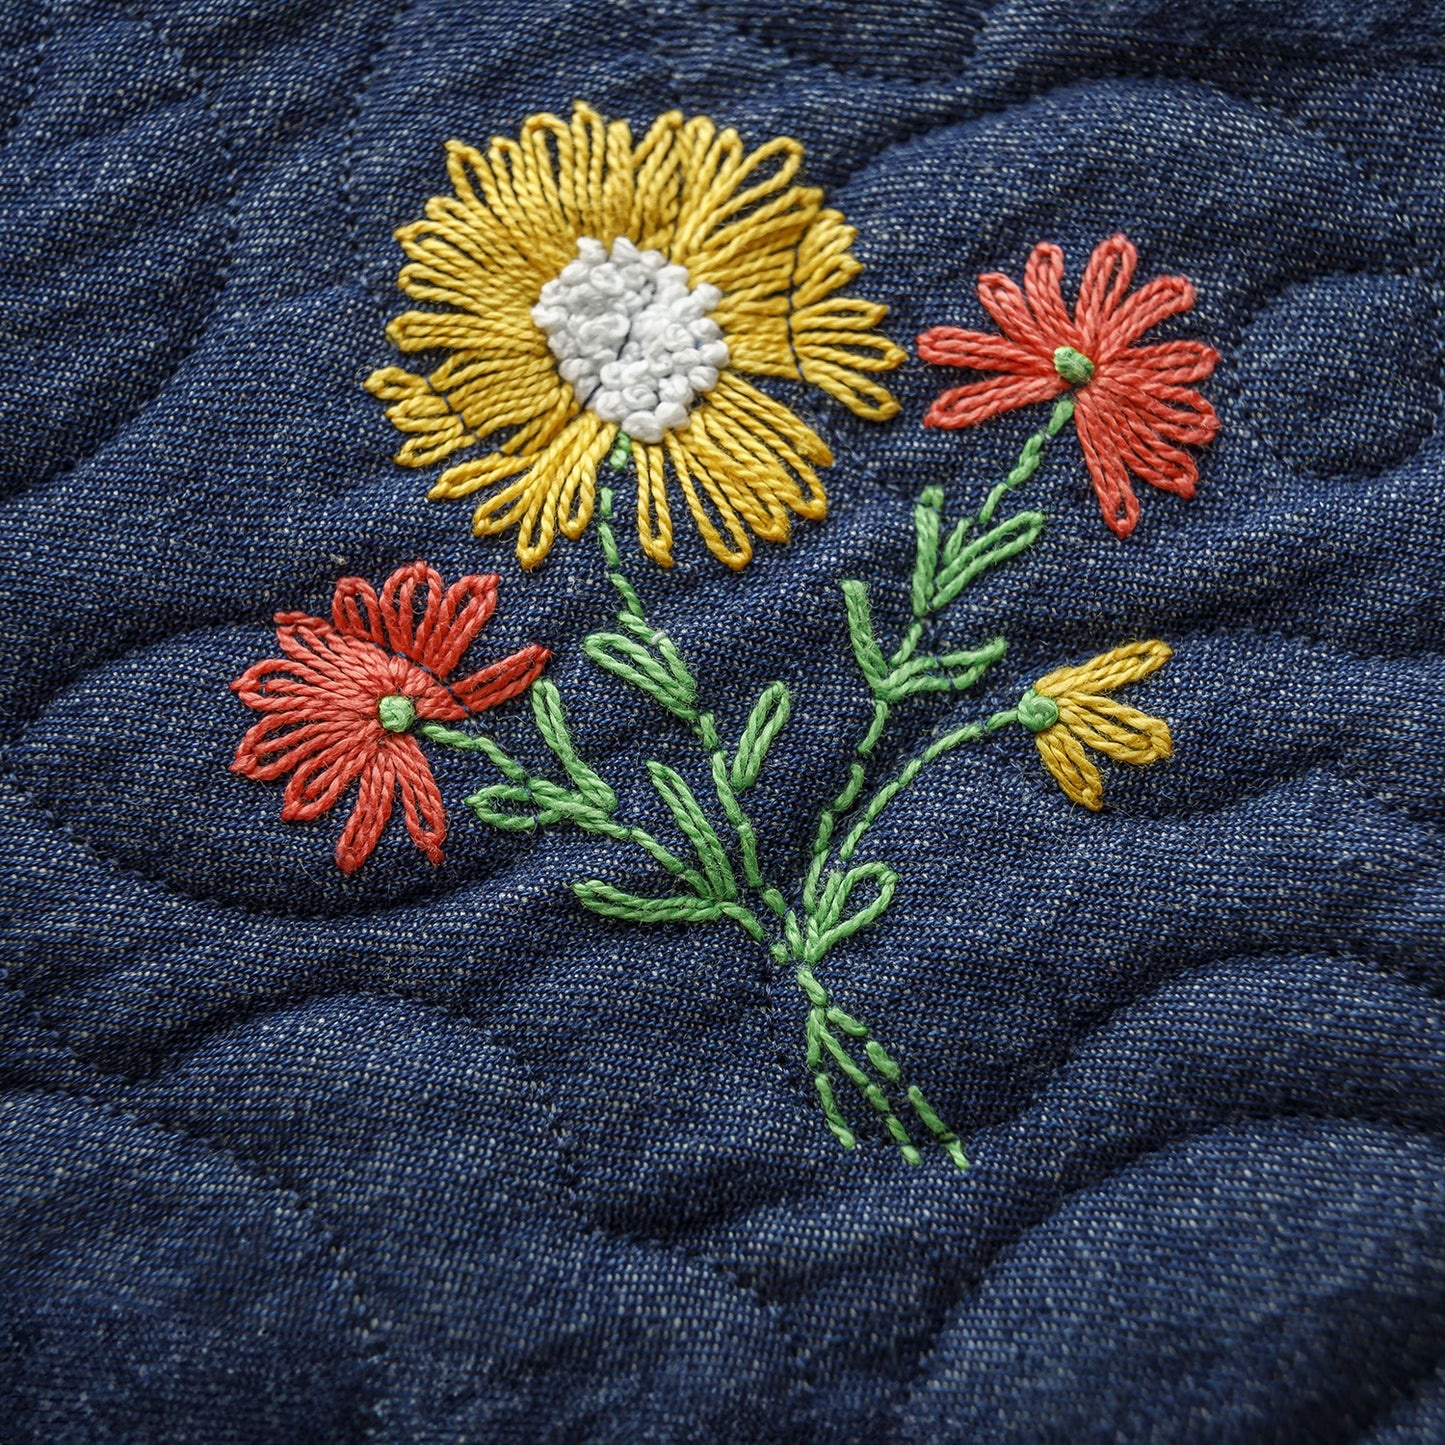 PREORDER - Ingrid's Wildflowers - An Heirloom Embroidery Kit by Missouri Star Alternative View #25